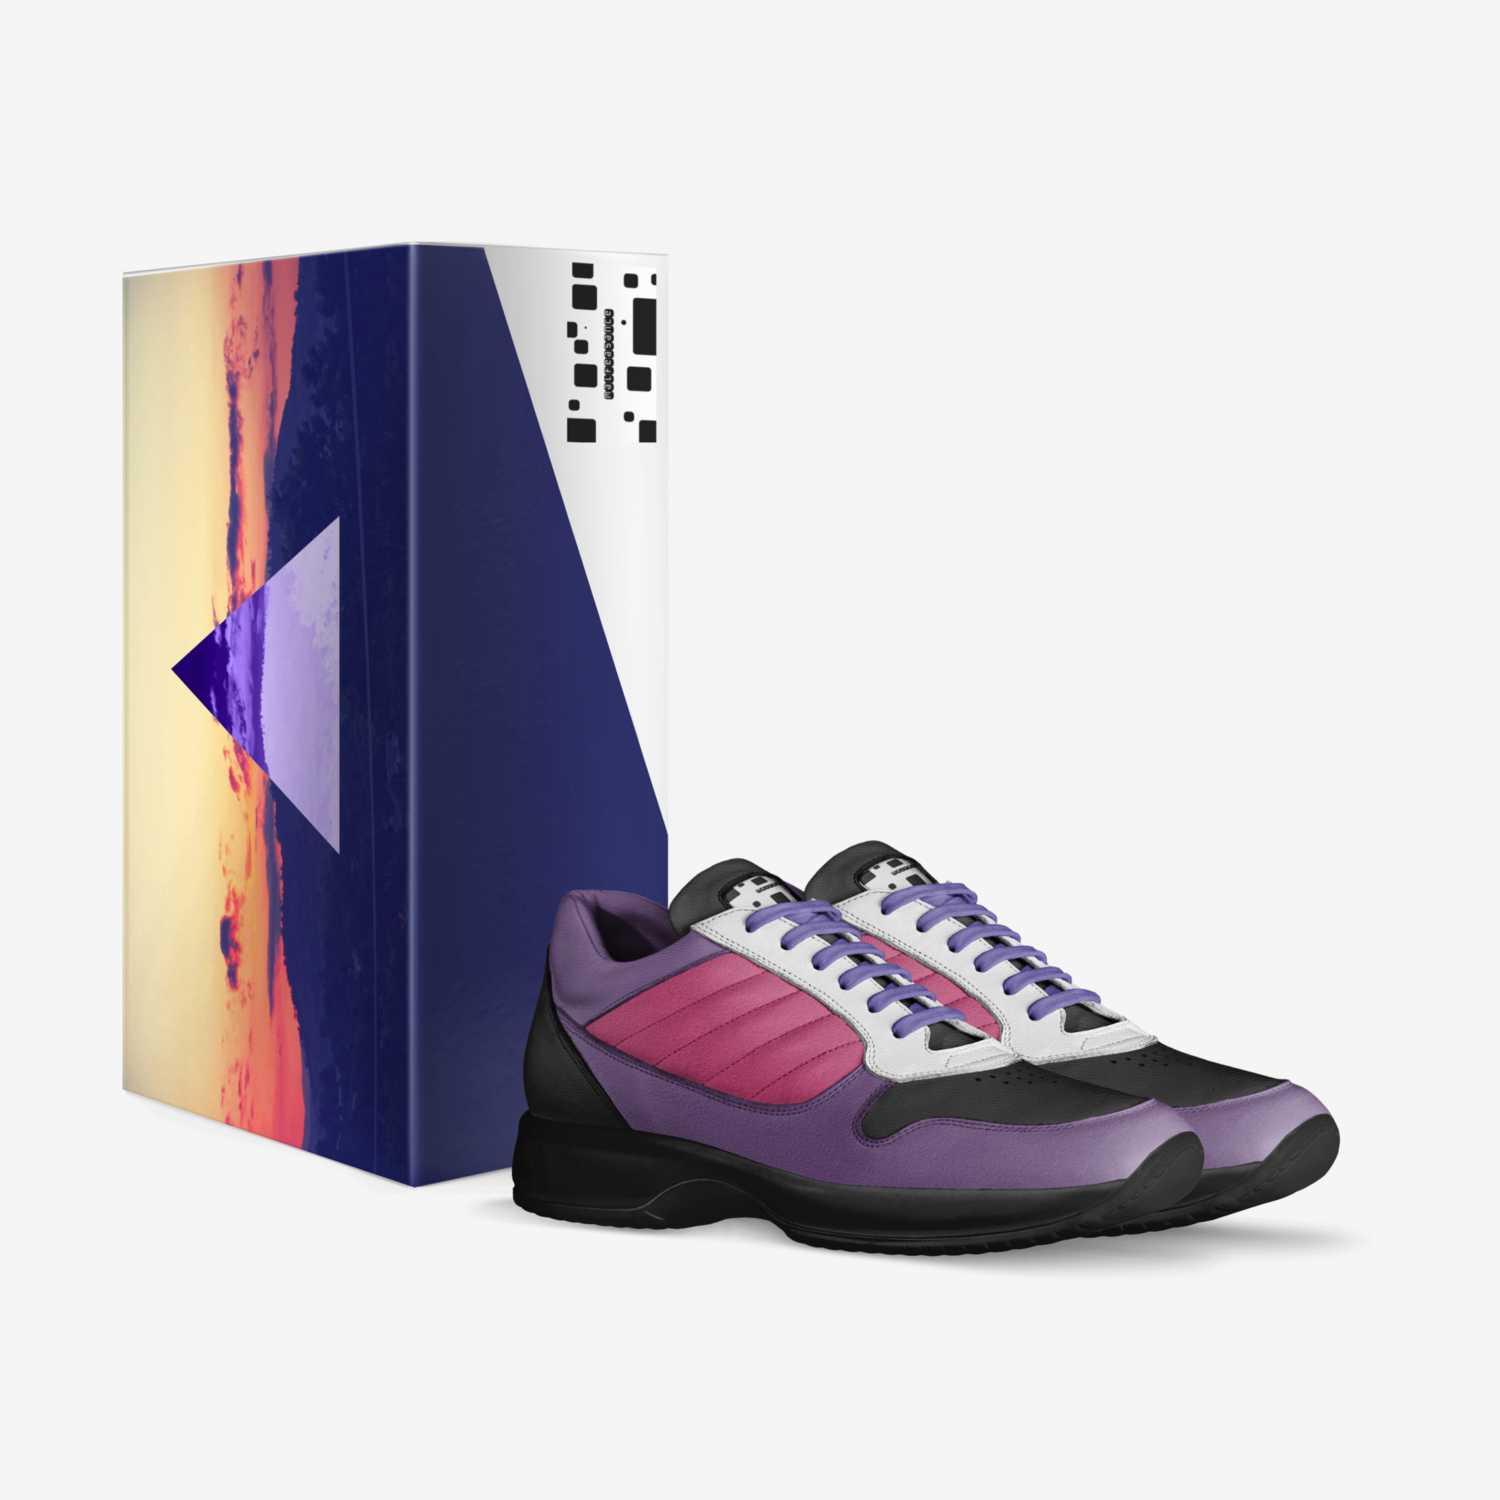 Malfeasance custom made in Italy shoes by Tahir Hightower | Box view